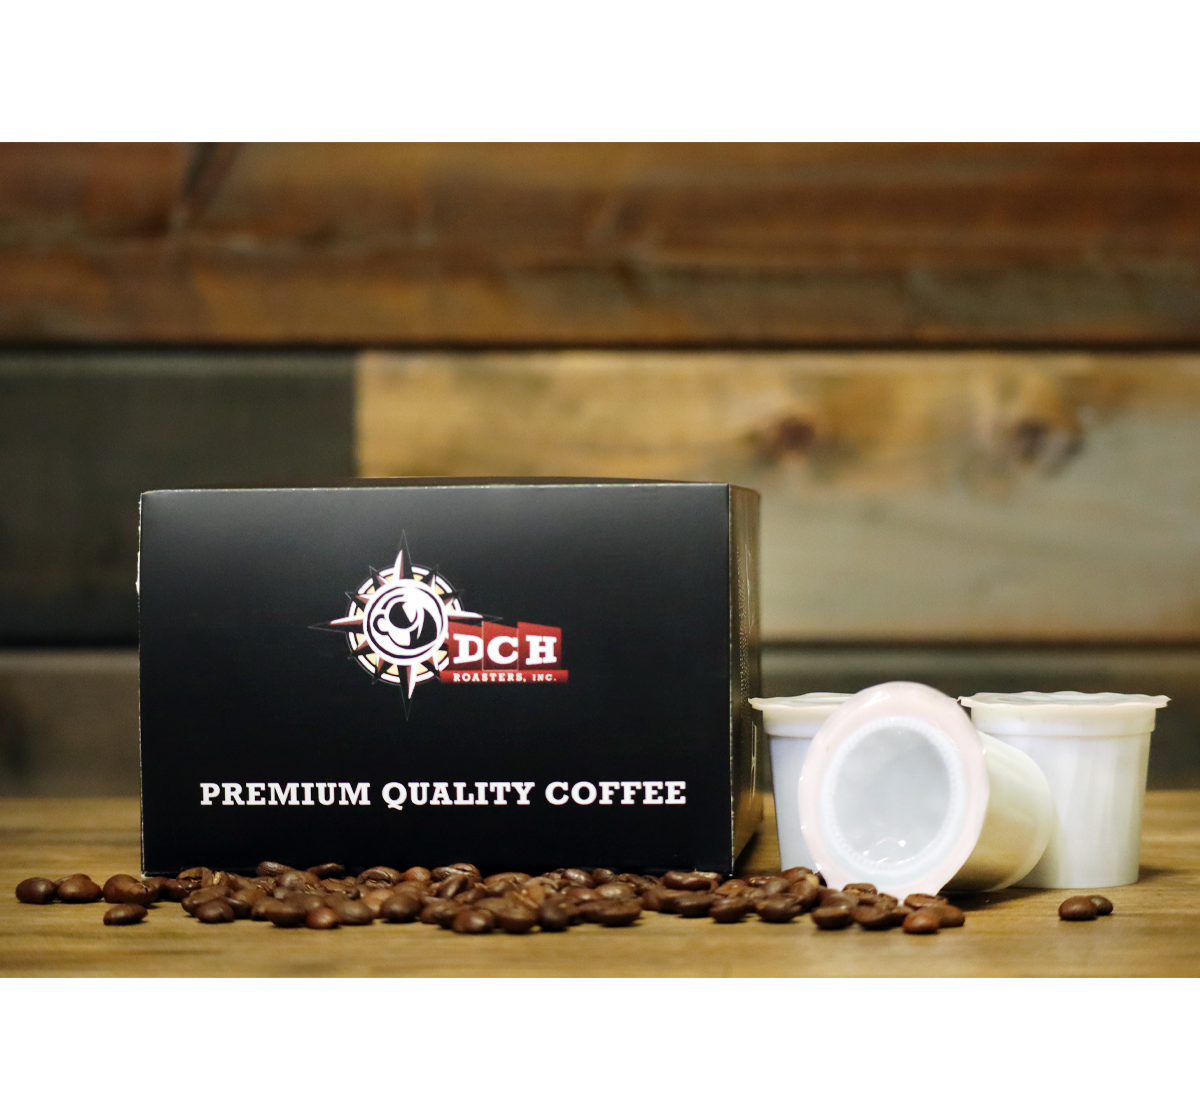 Single Serve Coffee Pods — DCH ROASTERS, INC.